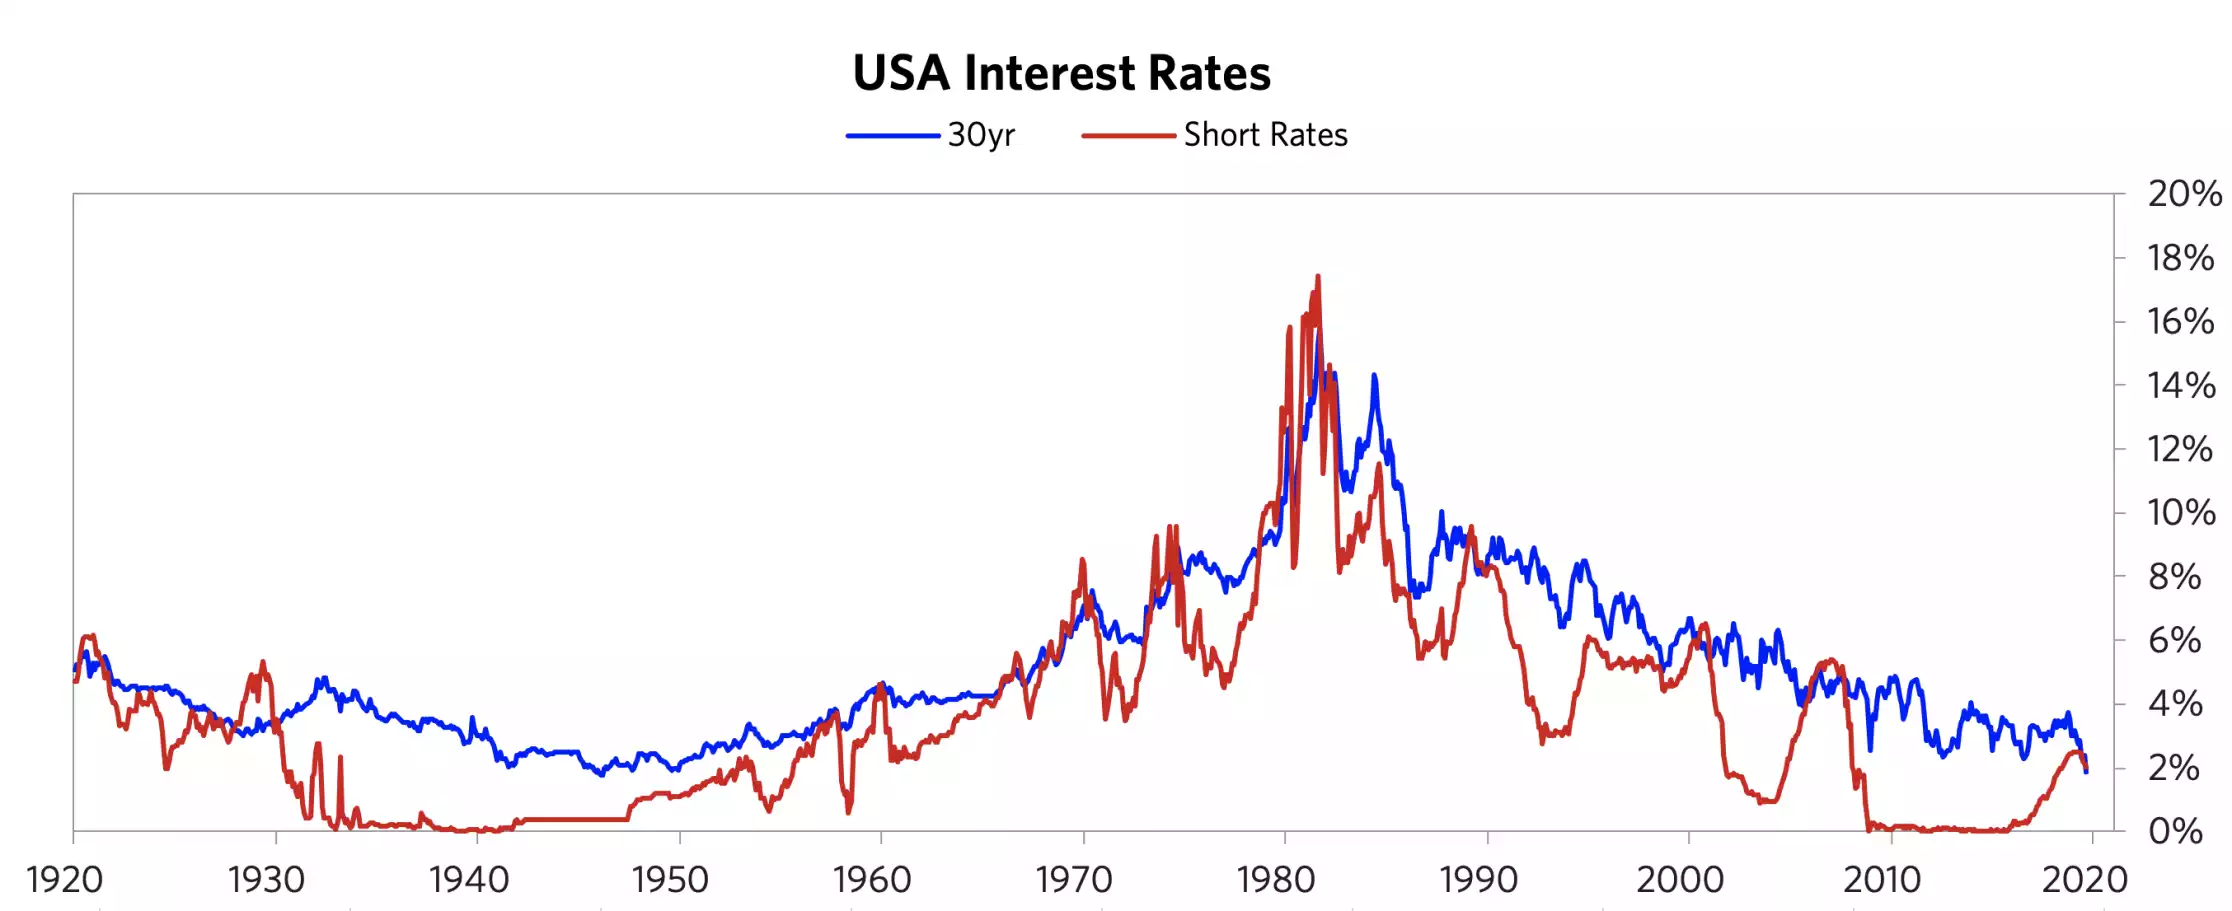 USA interest rates